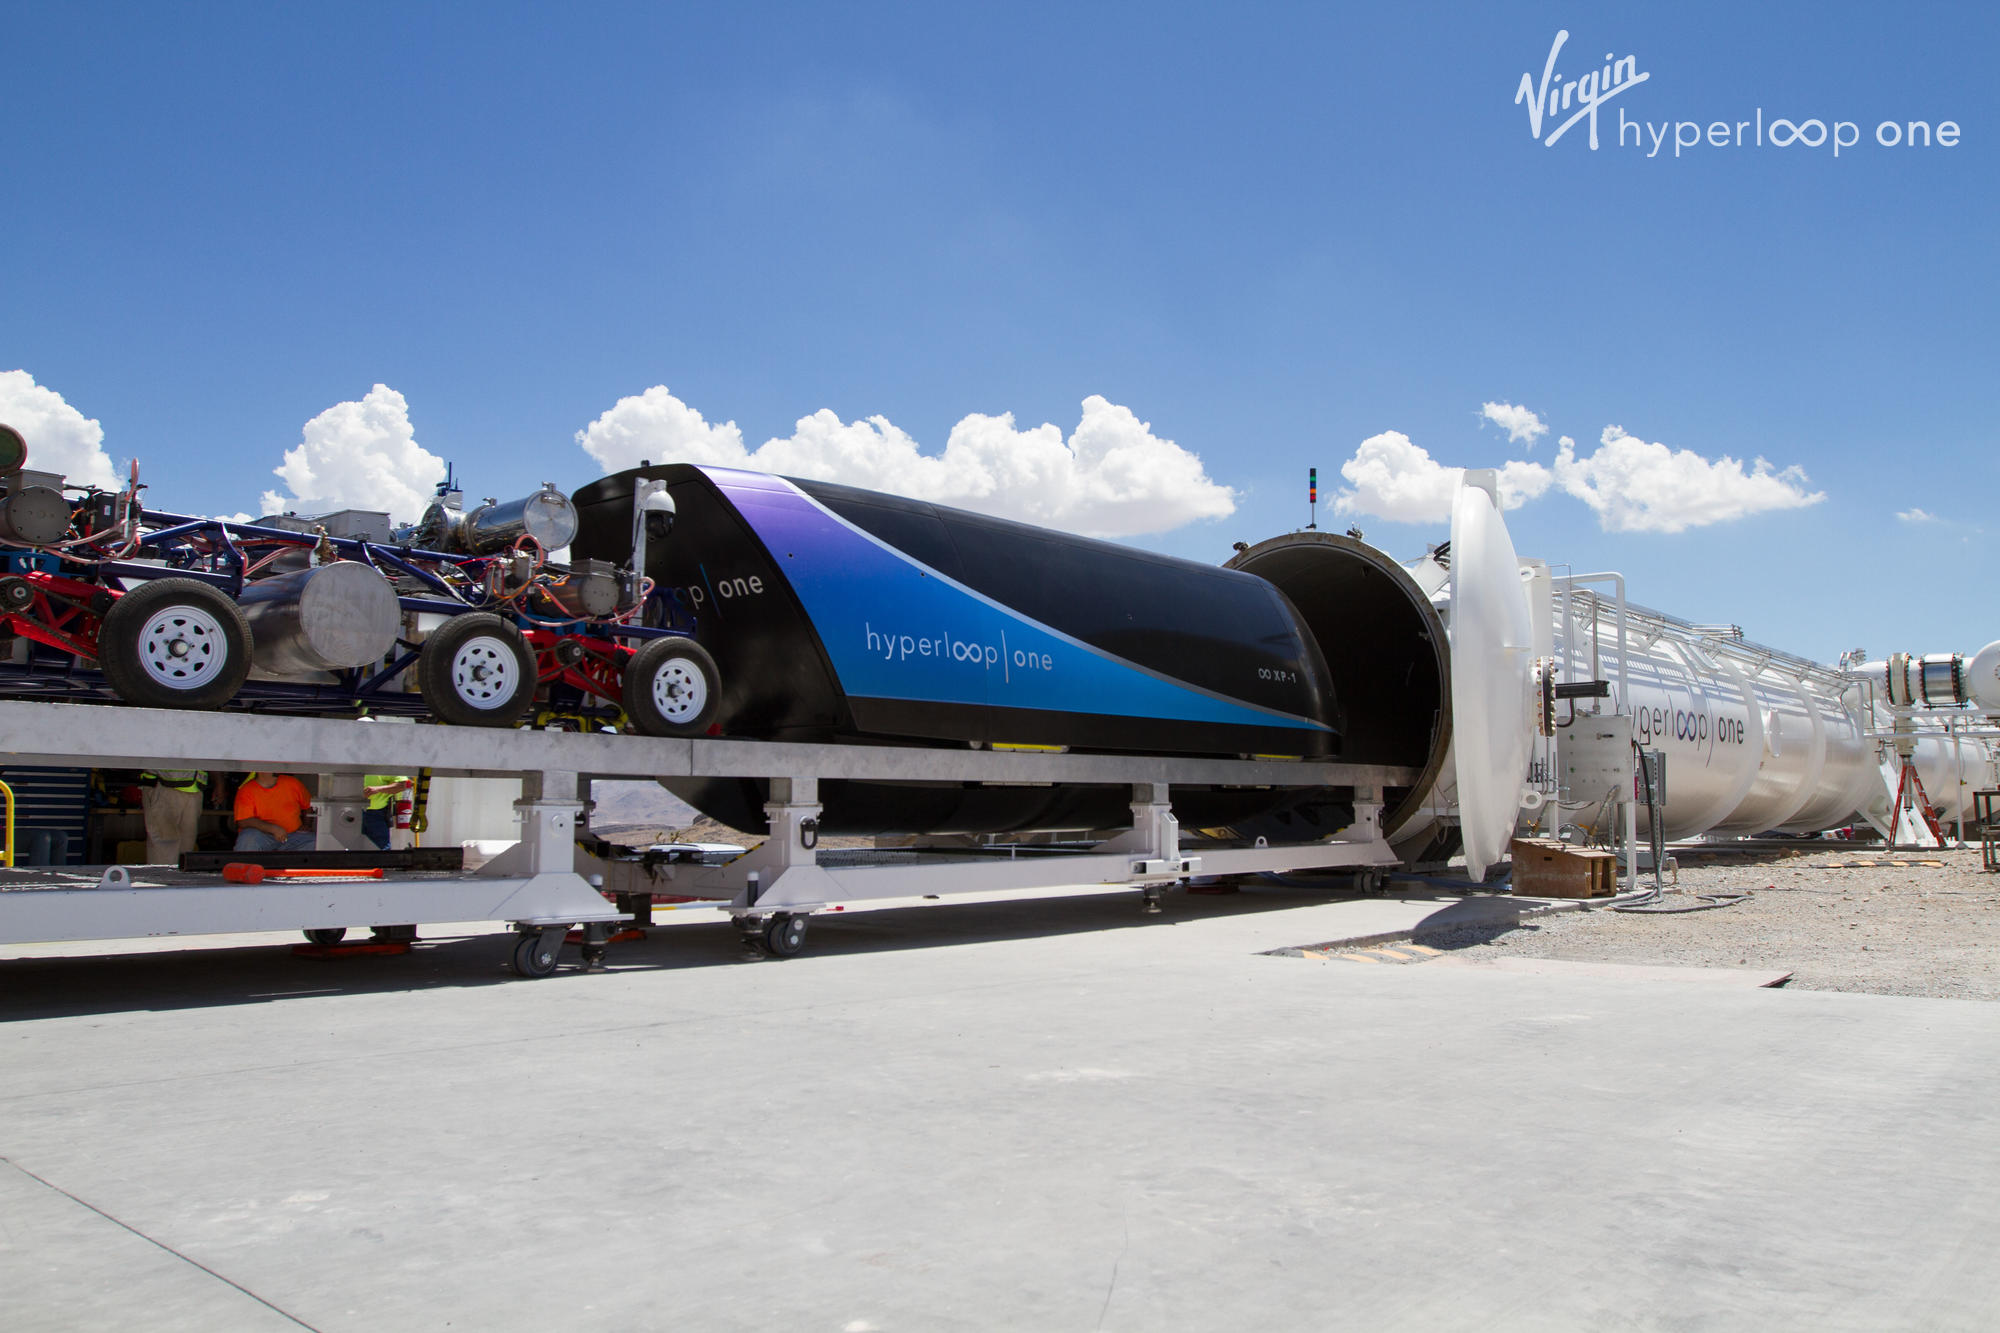 Virgin Hyperloop One: The Future of Transportation 746